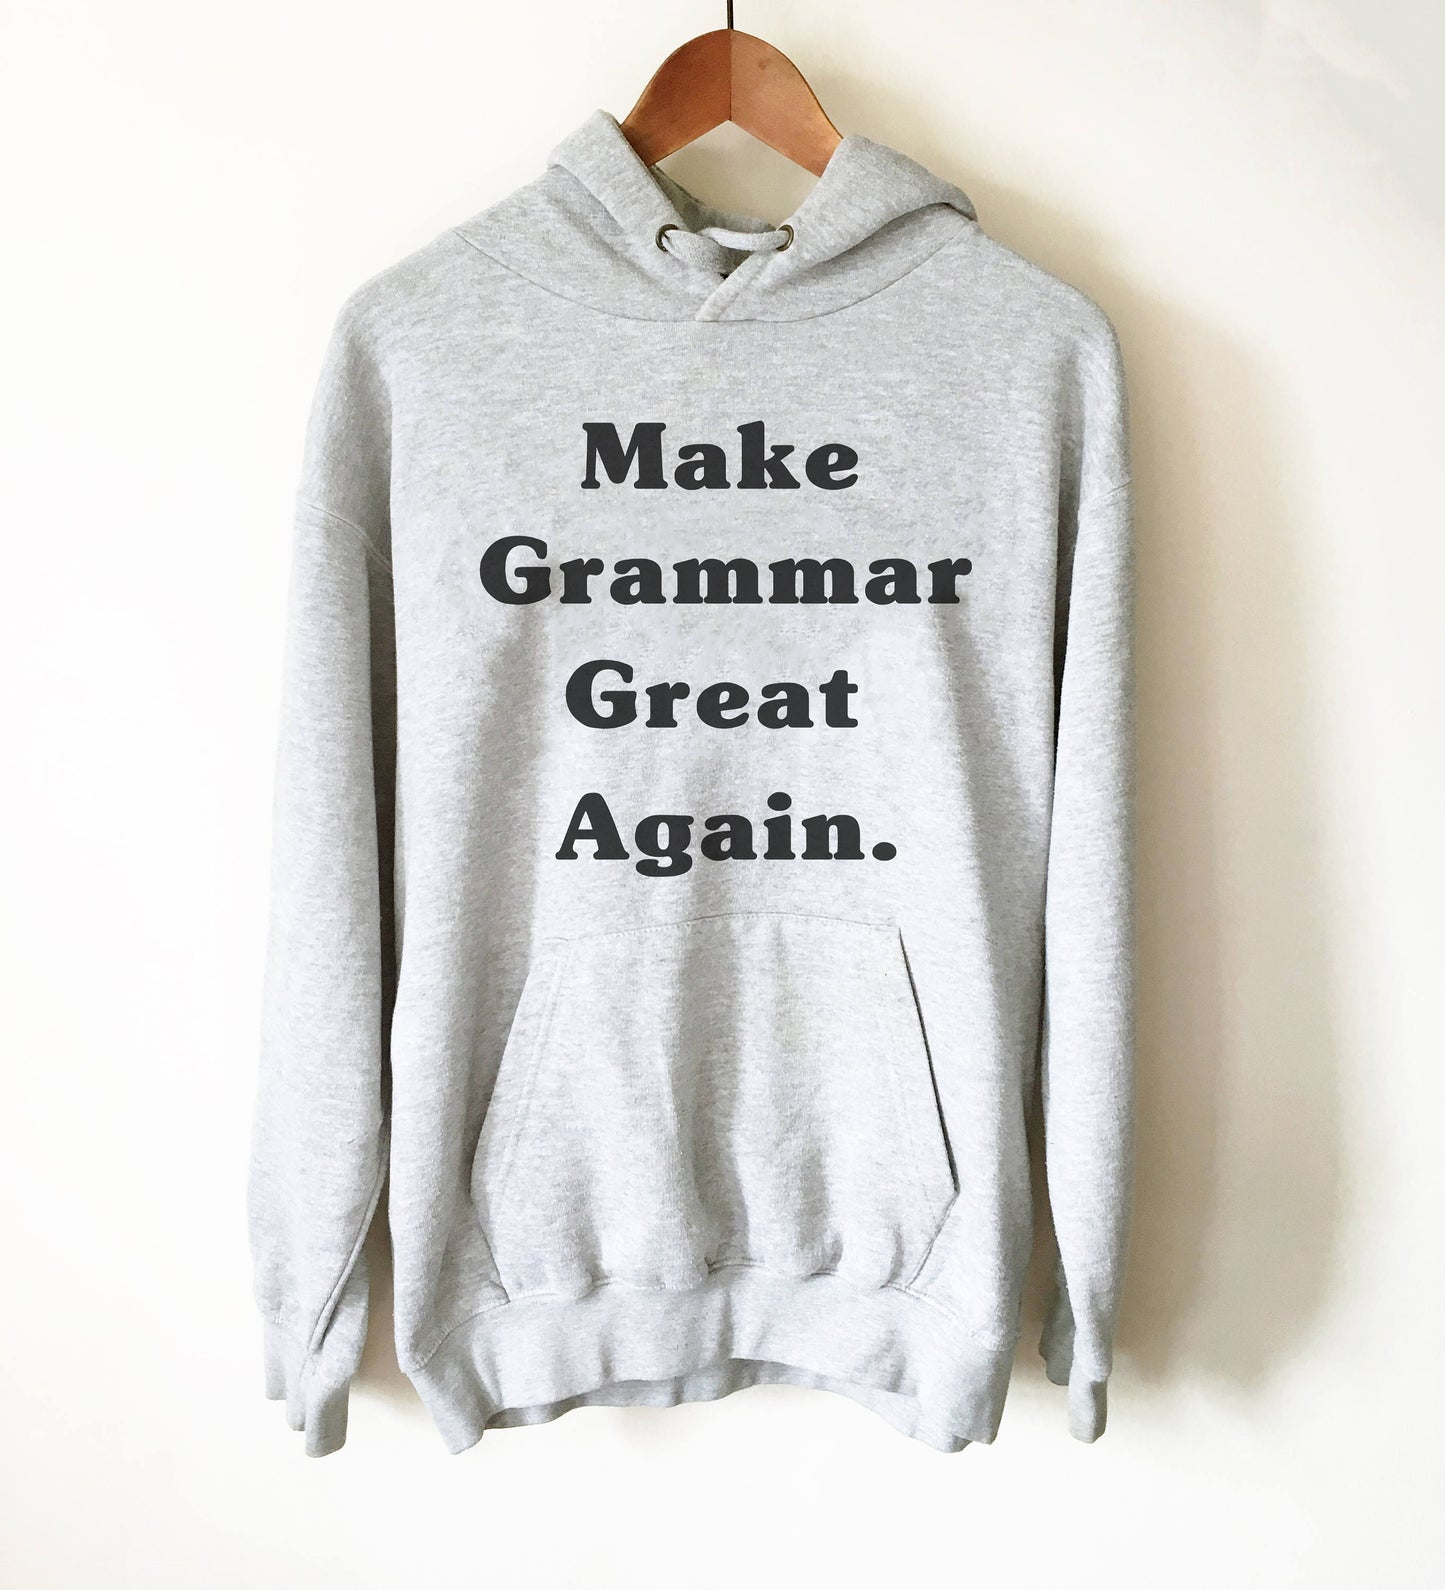 Make Grammar Great Again Hoodie - English teacher gift, Funny teacher shirts, Teacher life shirt, Teacher shirts, Teacher life shirt